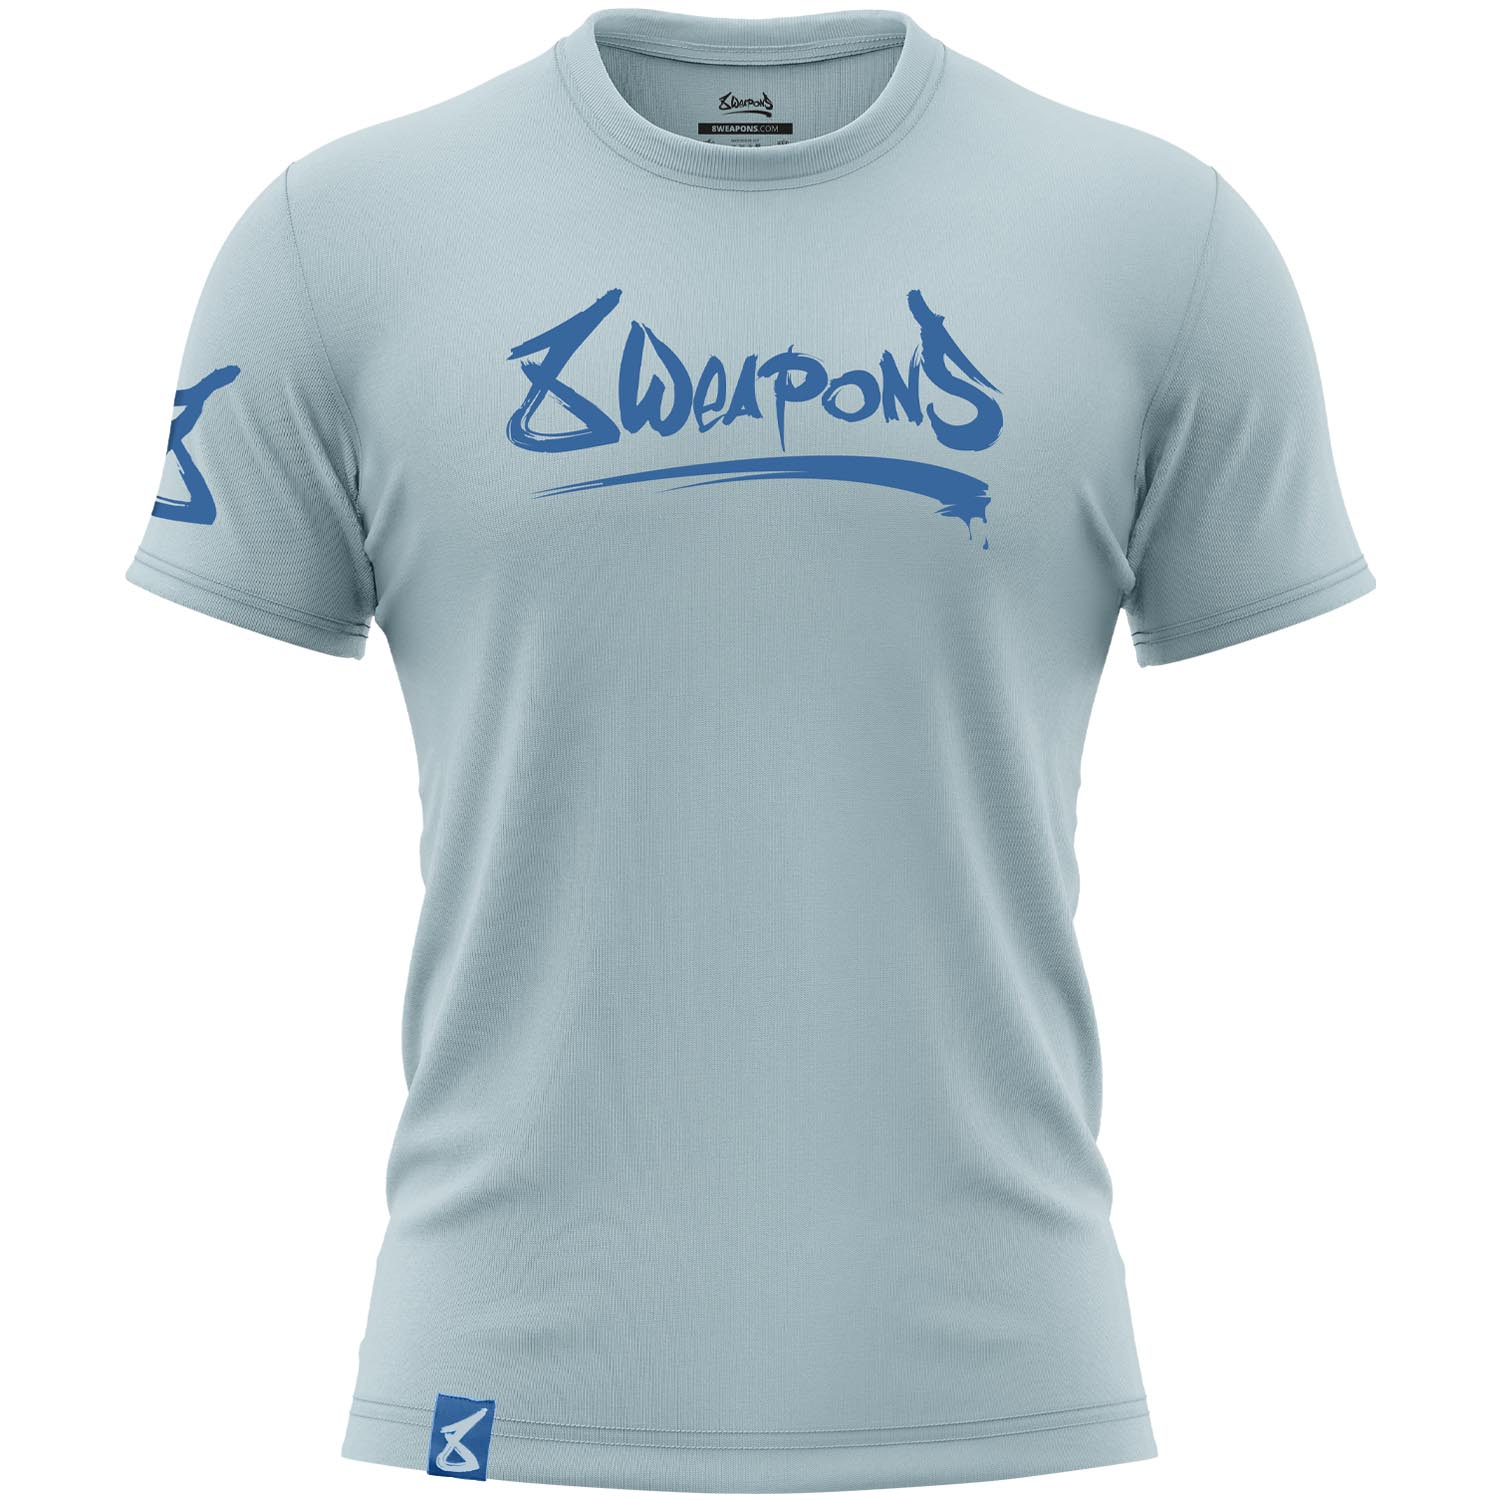 8 WEAPONS T-Shirt, Unlimited 2.0, light blue, M